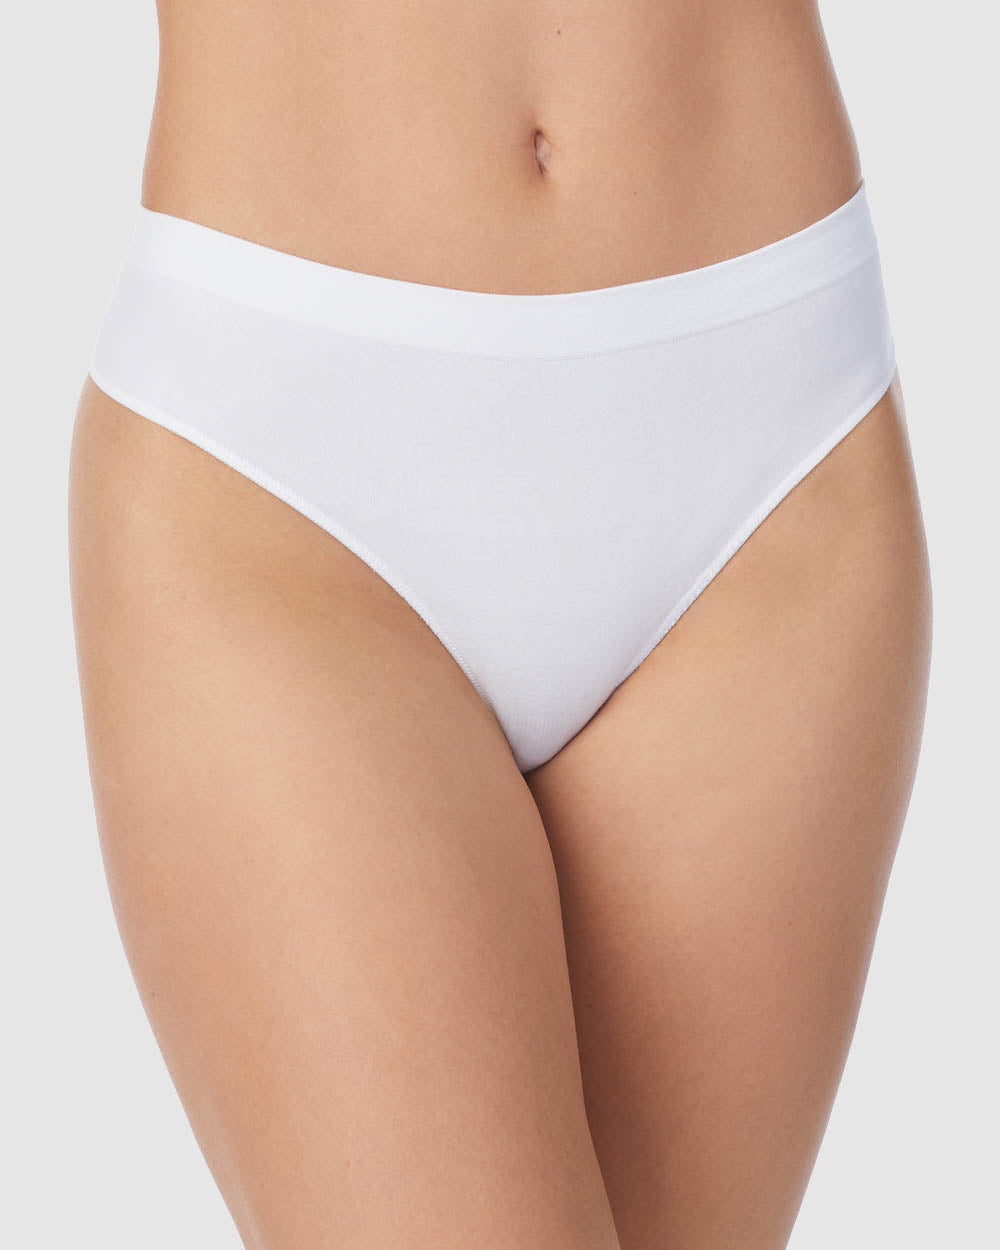 A lady wearing White Cabana Cotton Seamless Thong Underwear